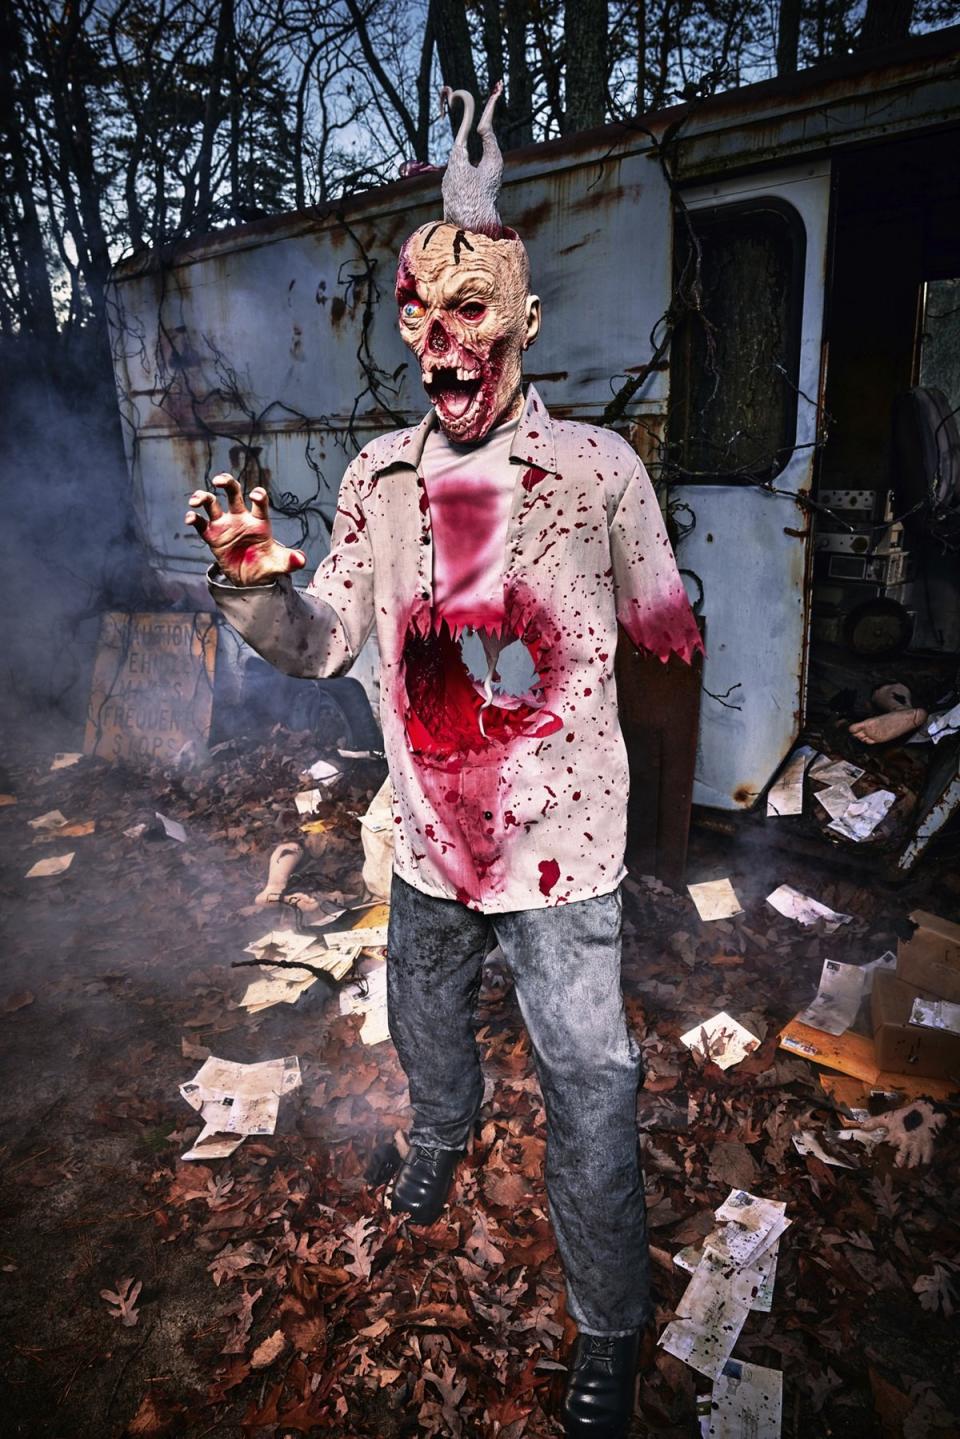 Spirit Halloween's Rick Ratman zombie animatronic figure, posed.